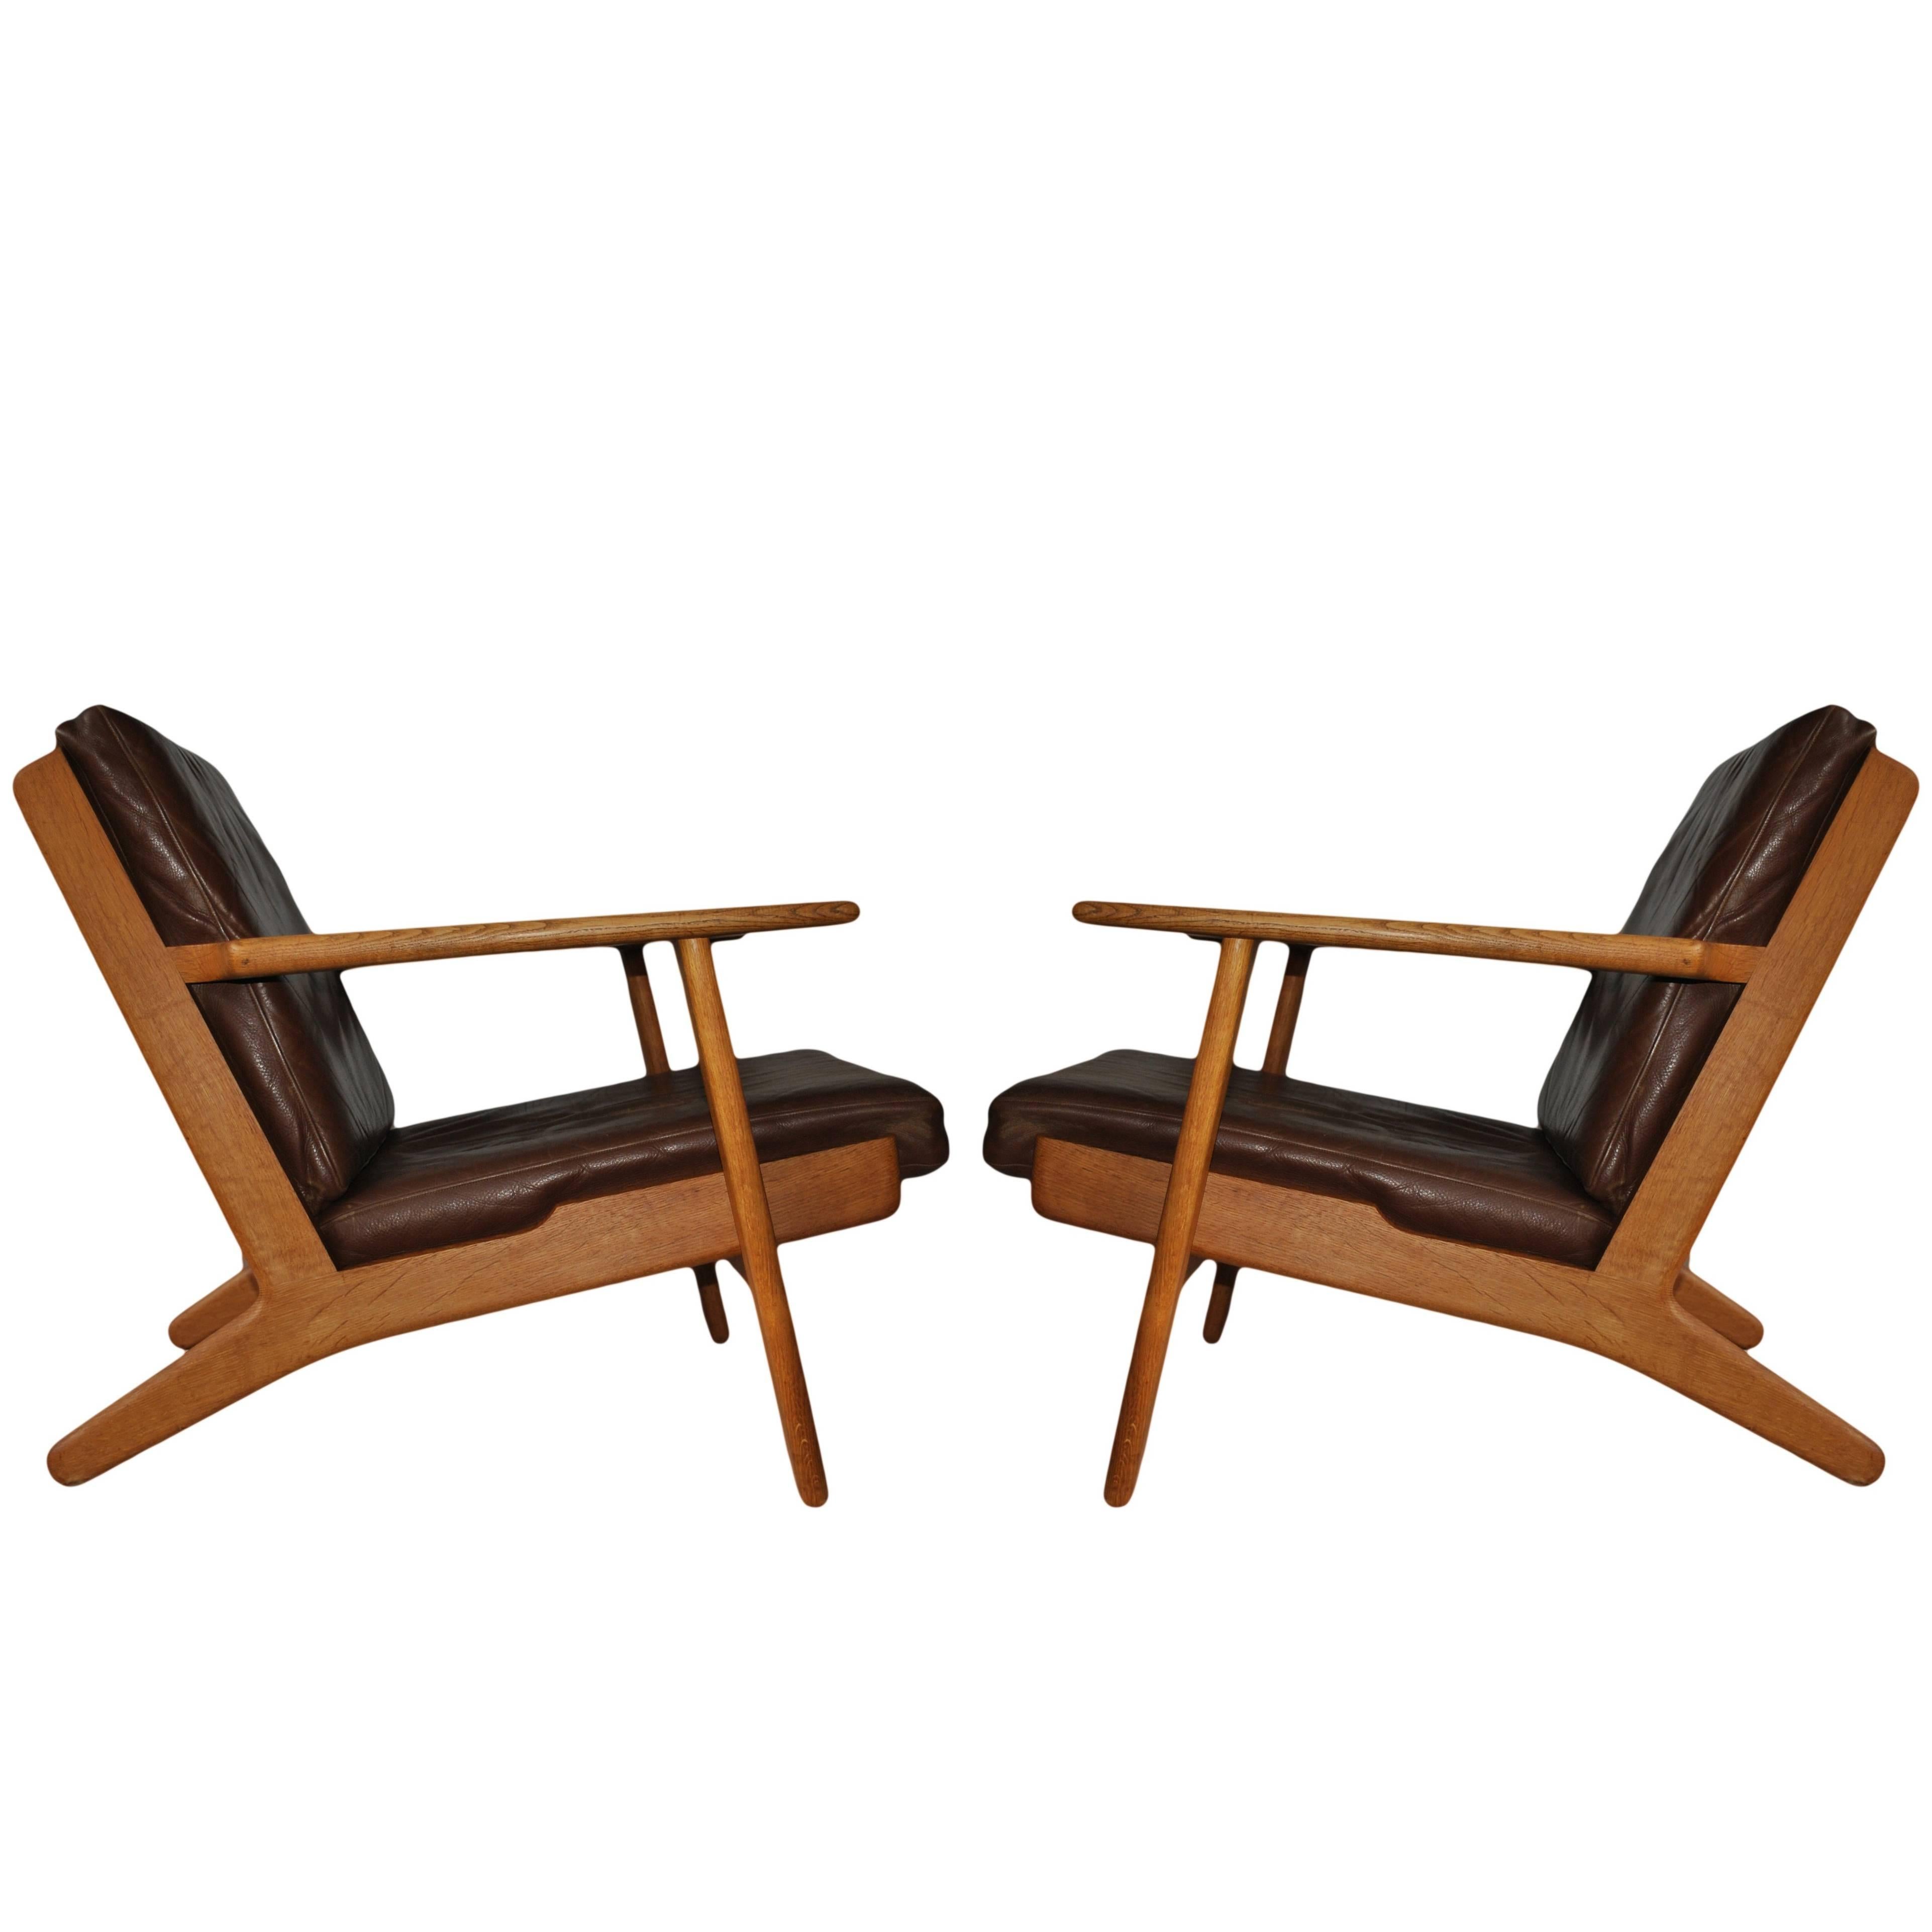 Pair of Hans J Wegner ge290 Oak Lounge Chairs, 1950s. Refurbished.